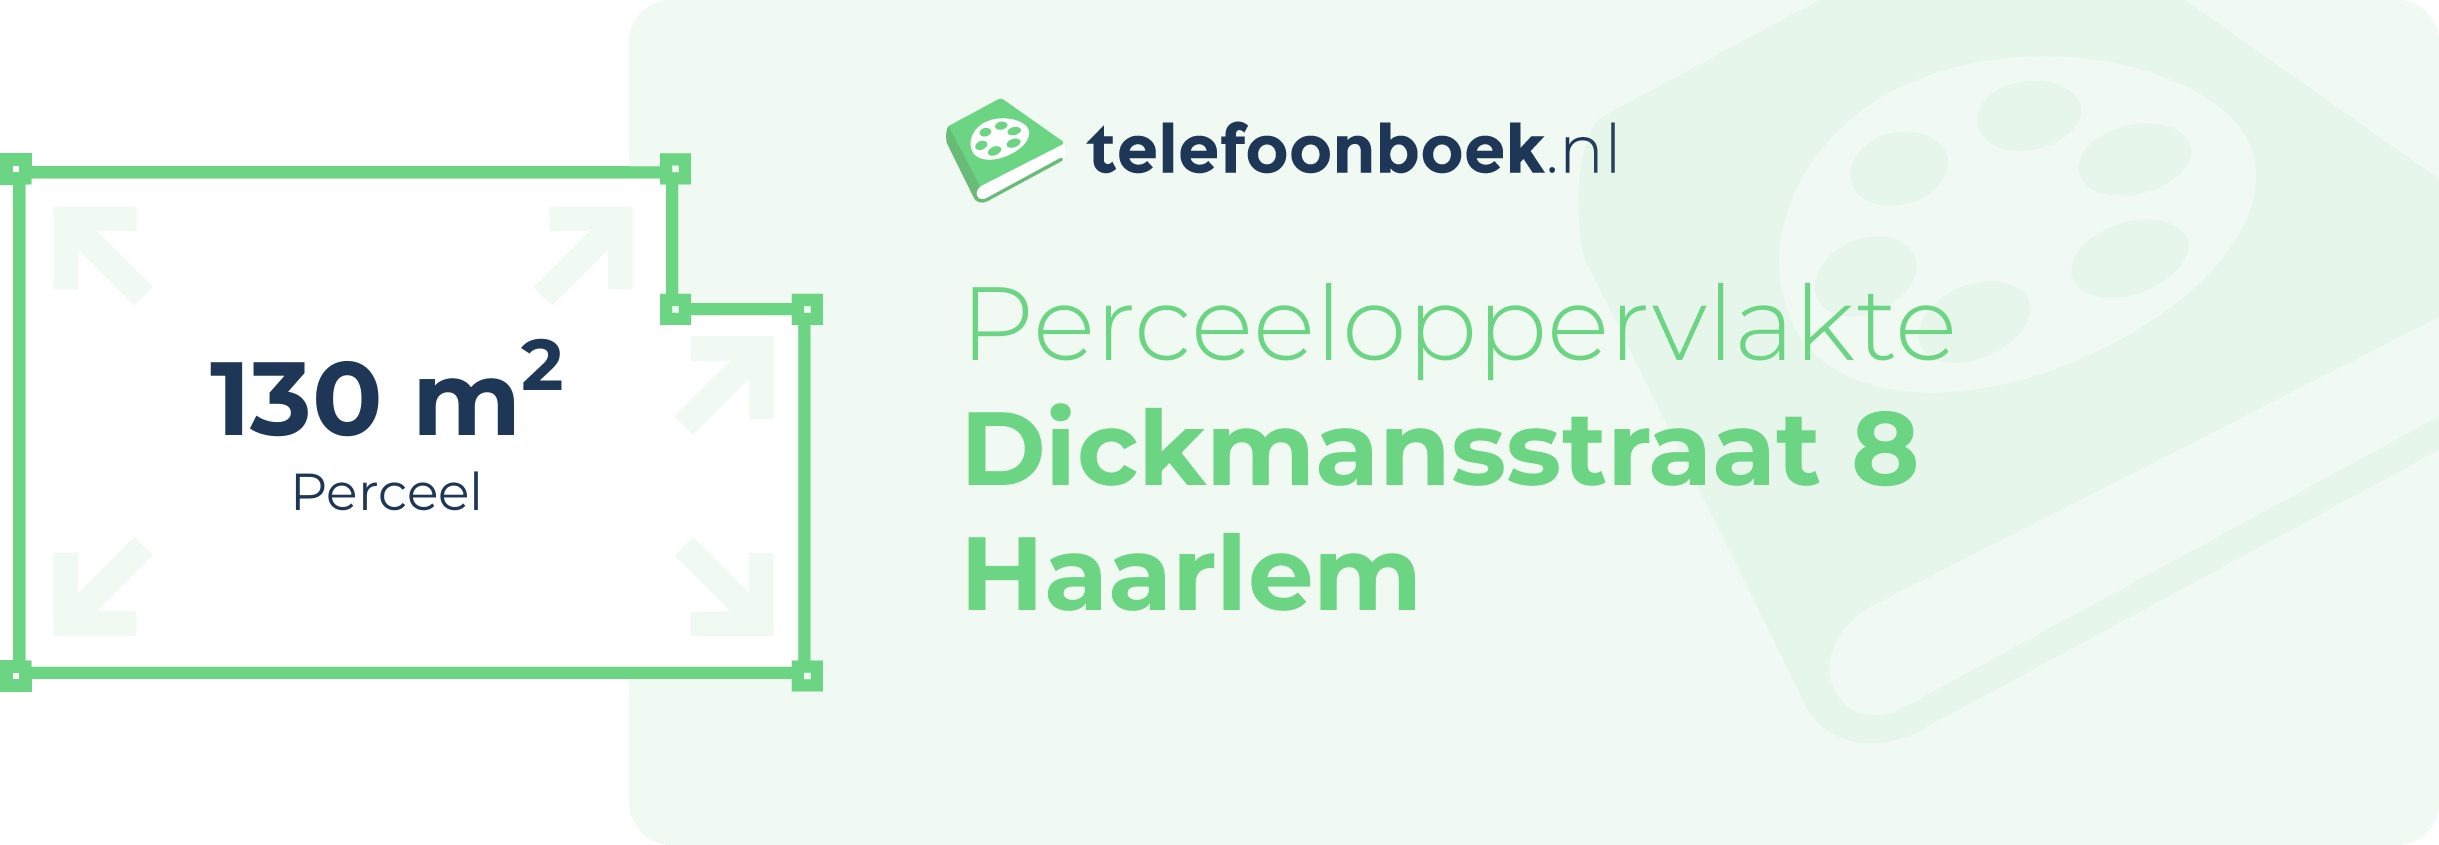 Perceeloppervlakte Dickmansstraat 8 Haarlem